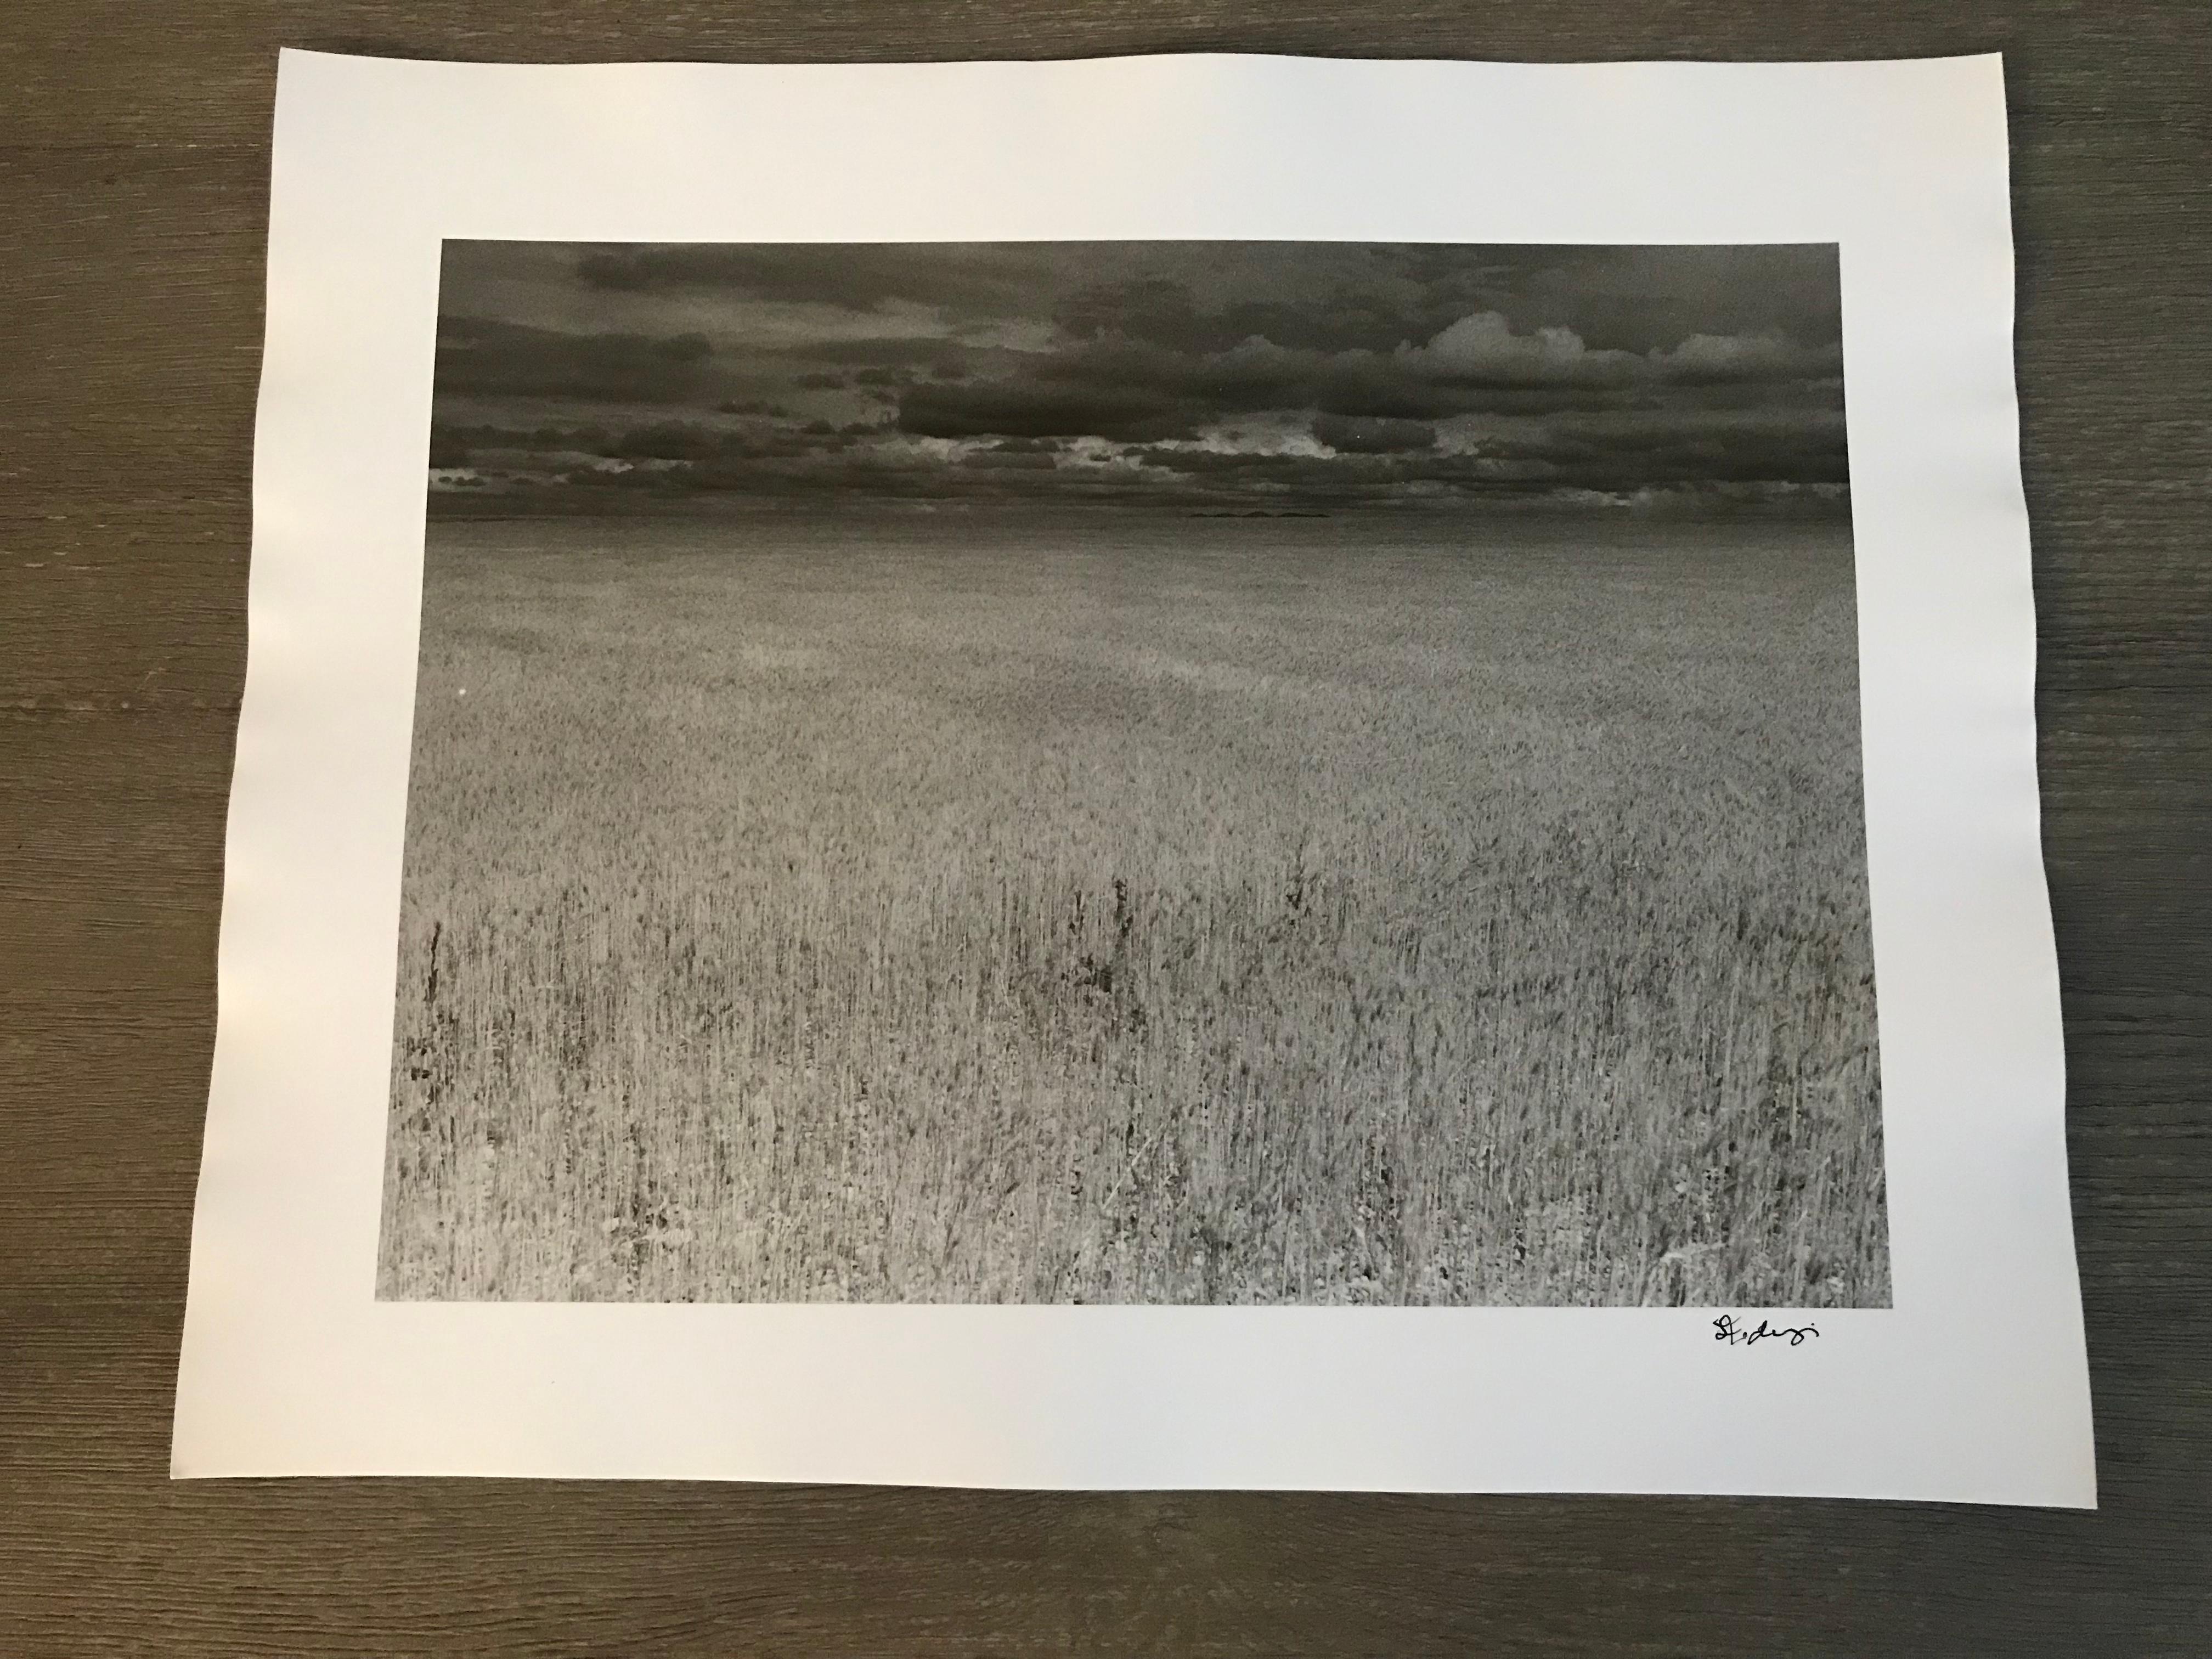 Hideoki, Black & White, Landscape, Kenya, Africa, 1994, Monochromatic, 16